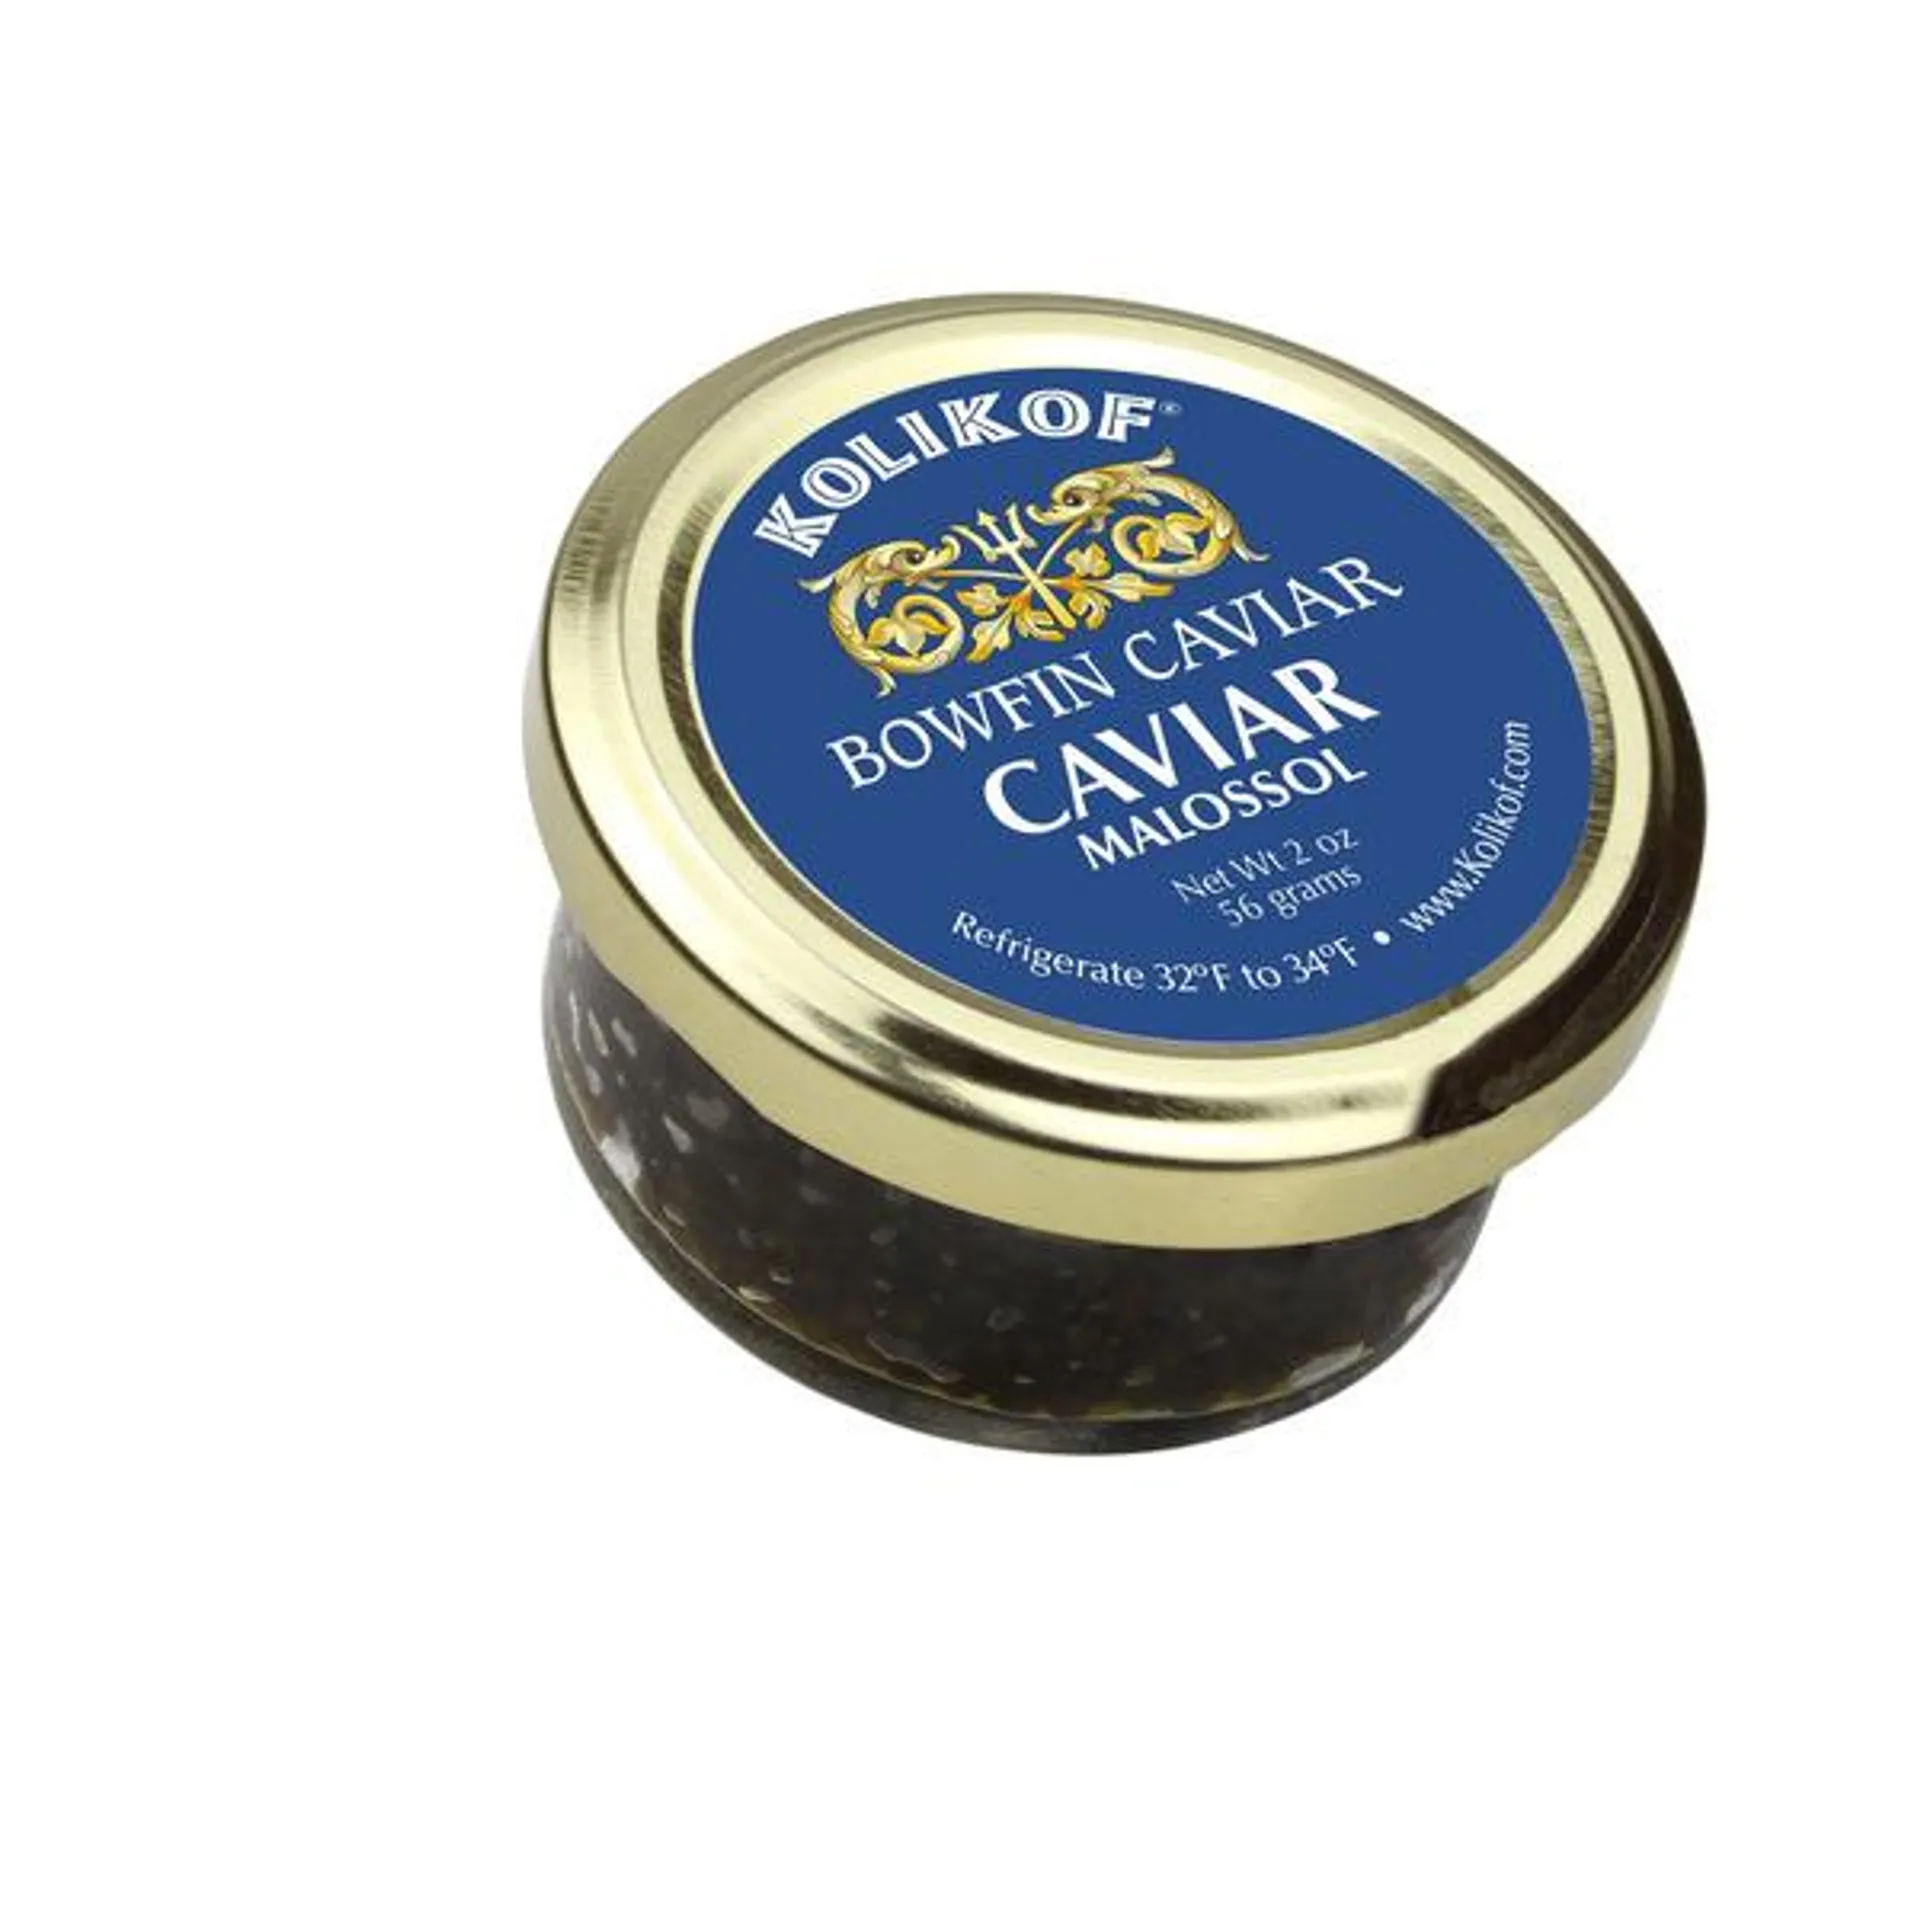 Kolikof Caviar Bowfin